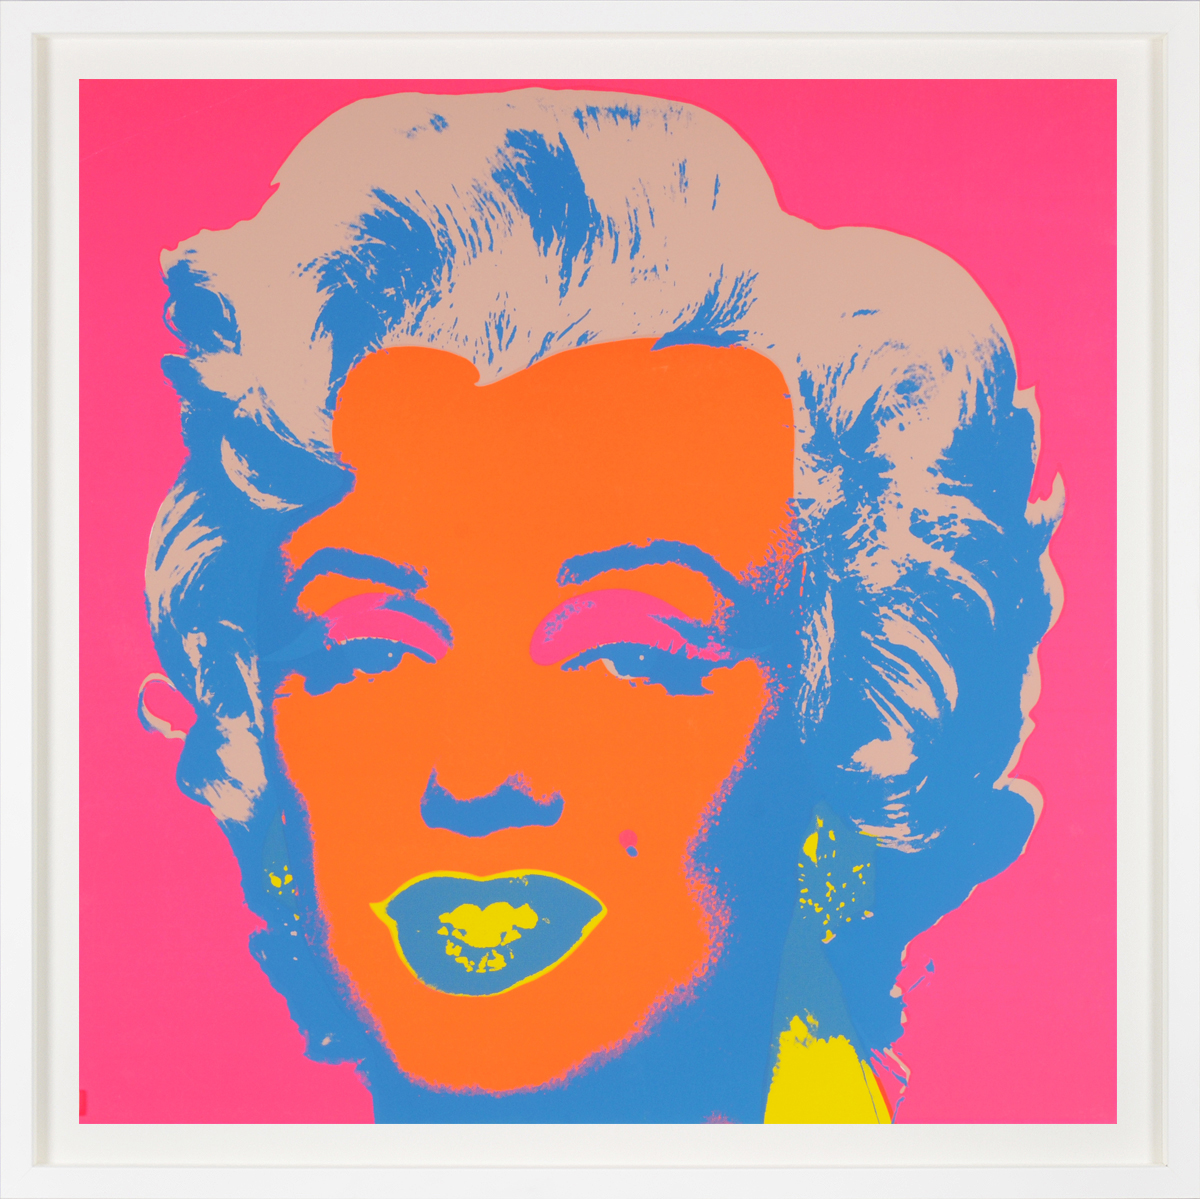 Andy Warhol, Marilyn Monroe (Marilyn), 1967, Screen Print